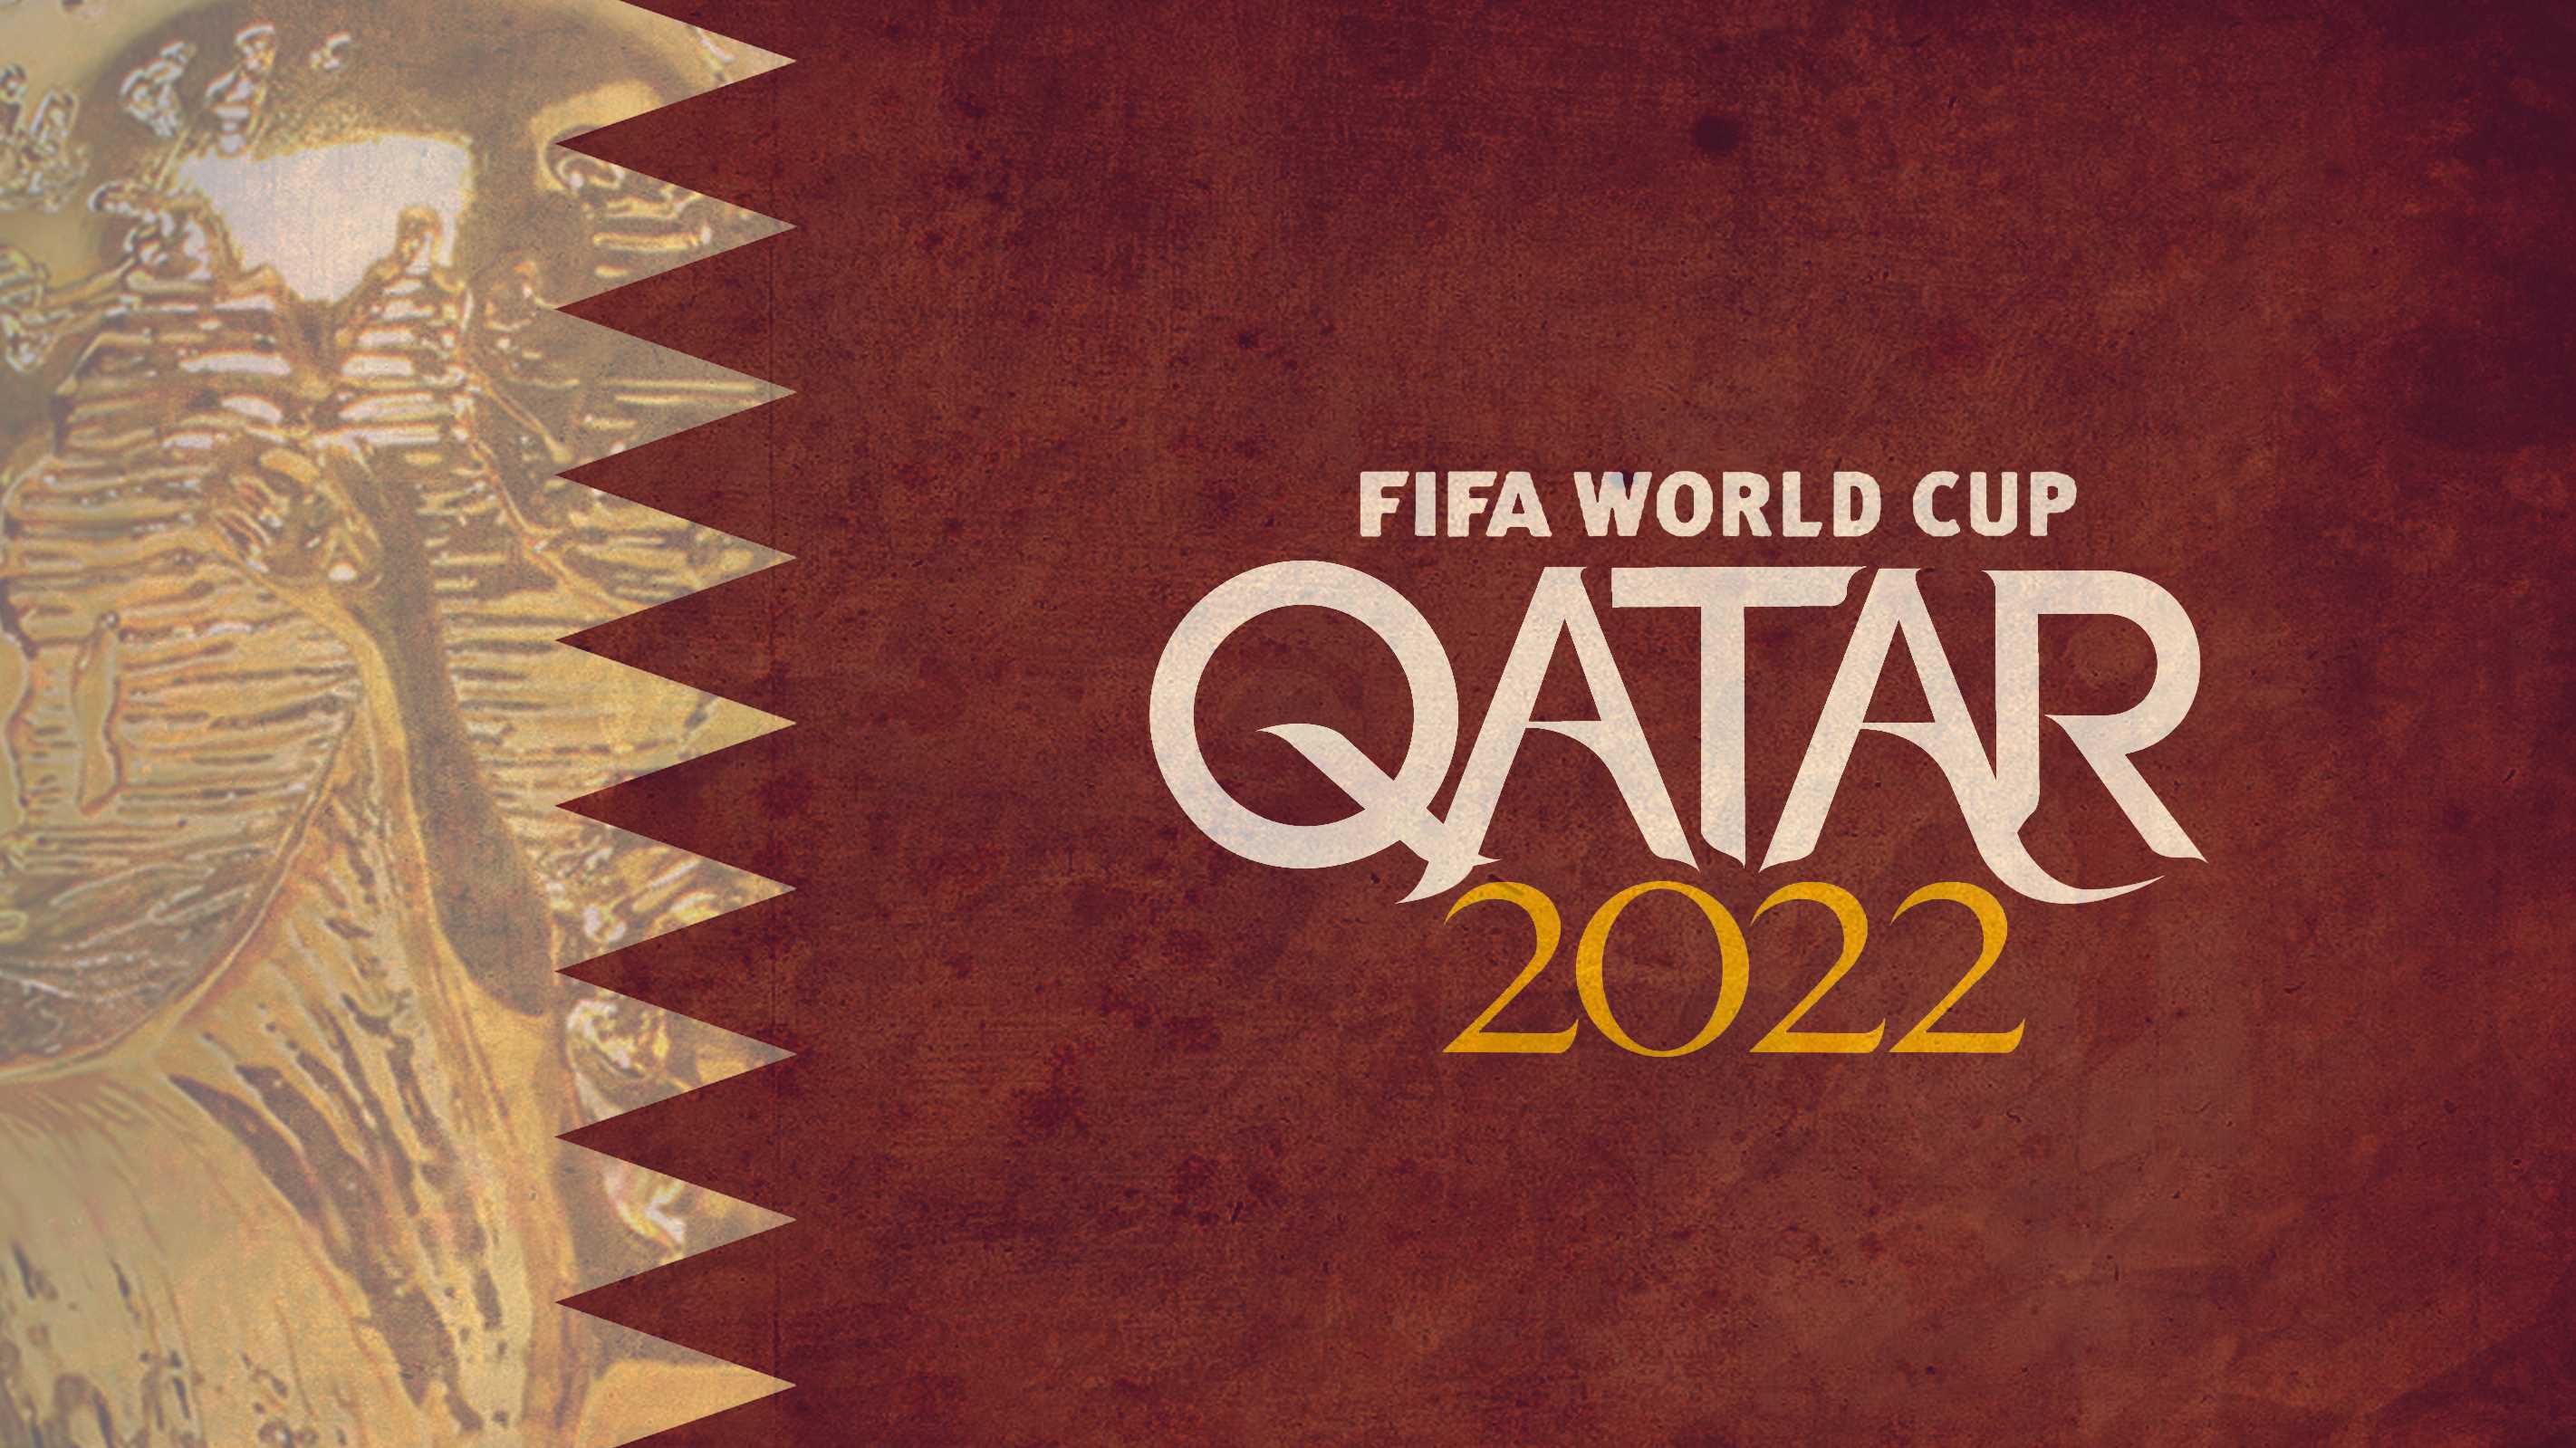 World Cup Qatar 2022 Wallpapers Top Free World Cup Qatar 2022